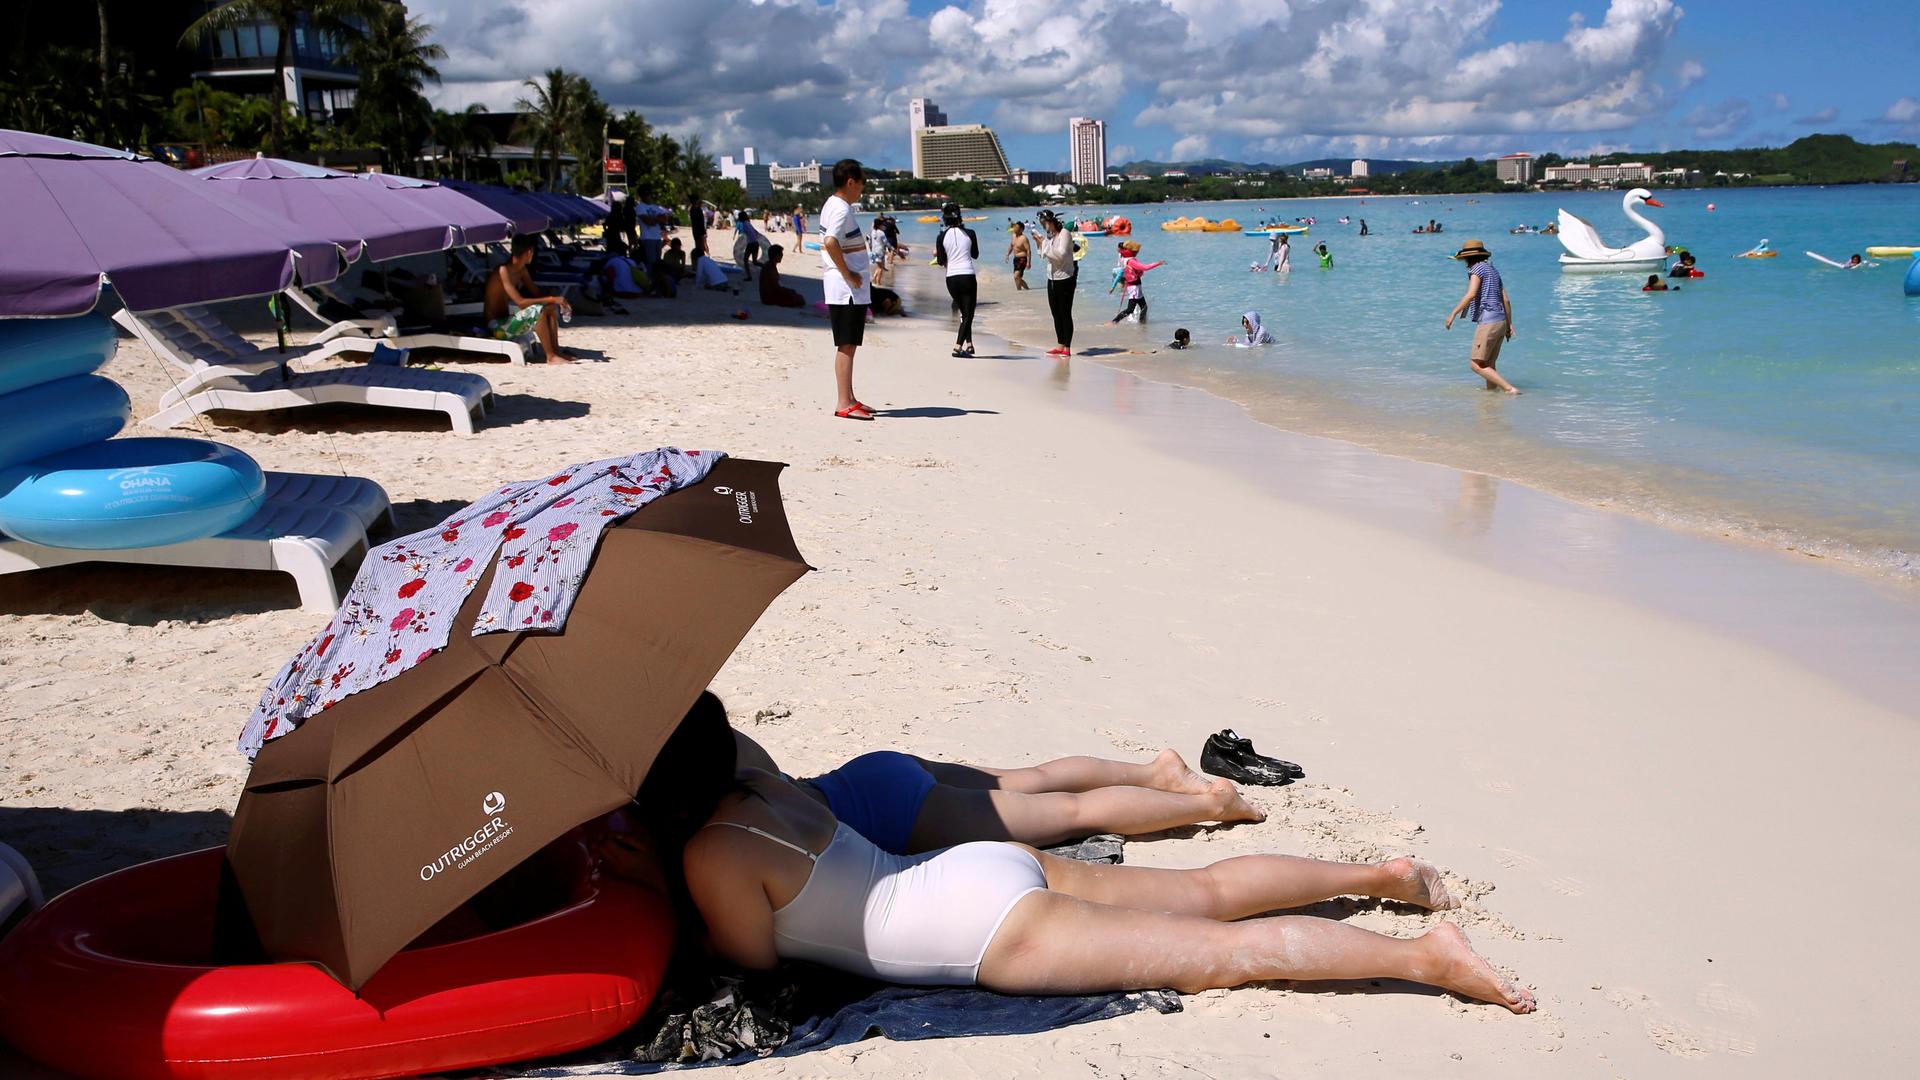 Tourists enjoy the beach in Tumon, Guam